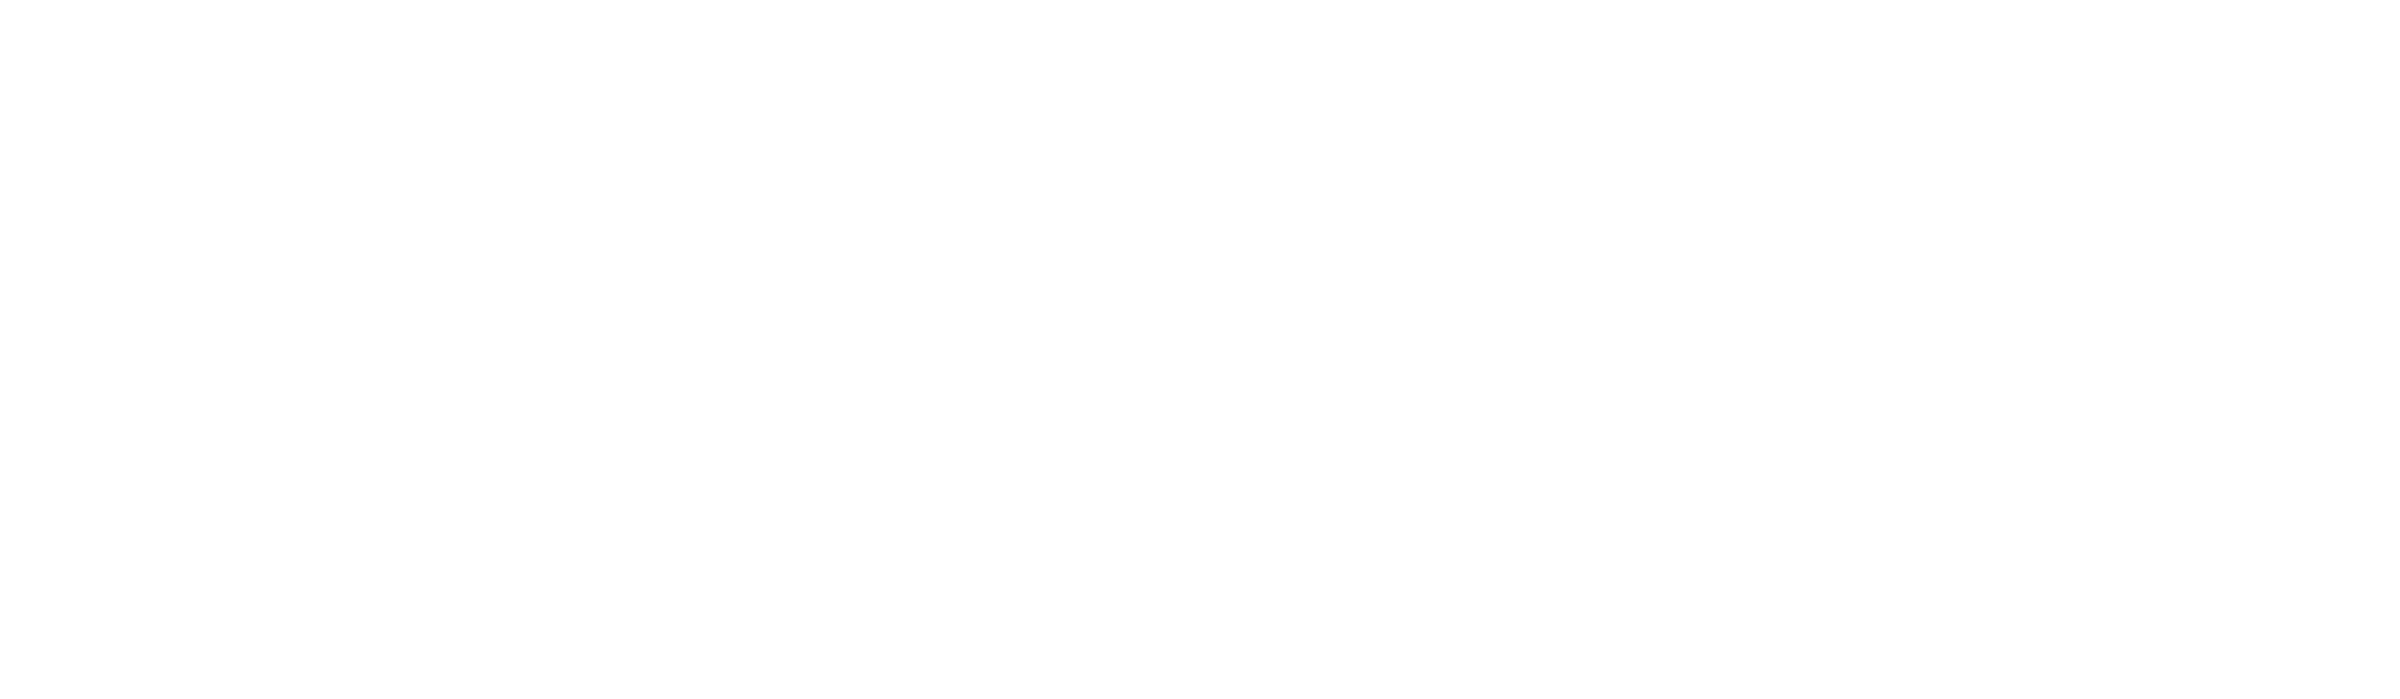 hubspot-logo-black-and-white